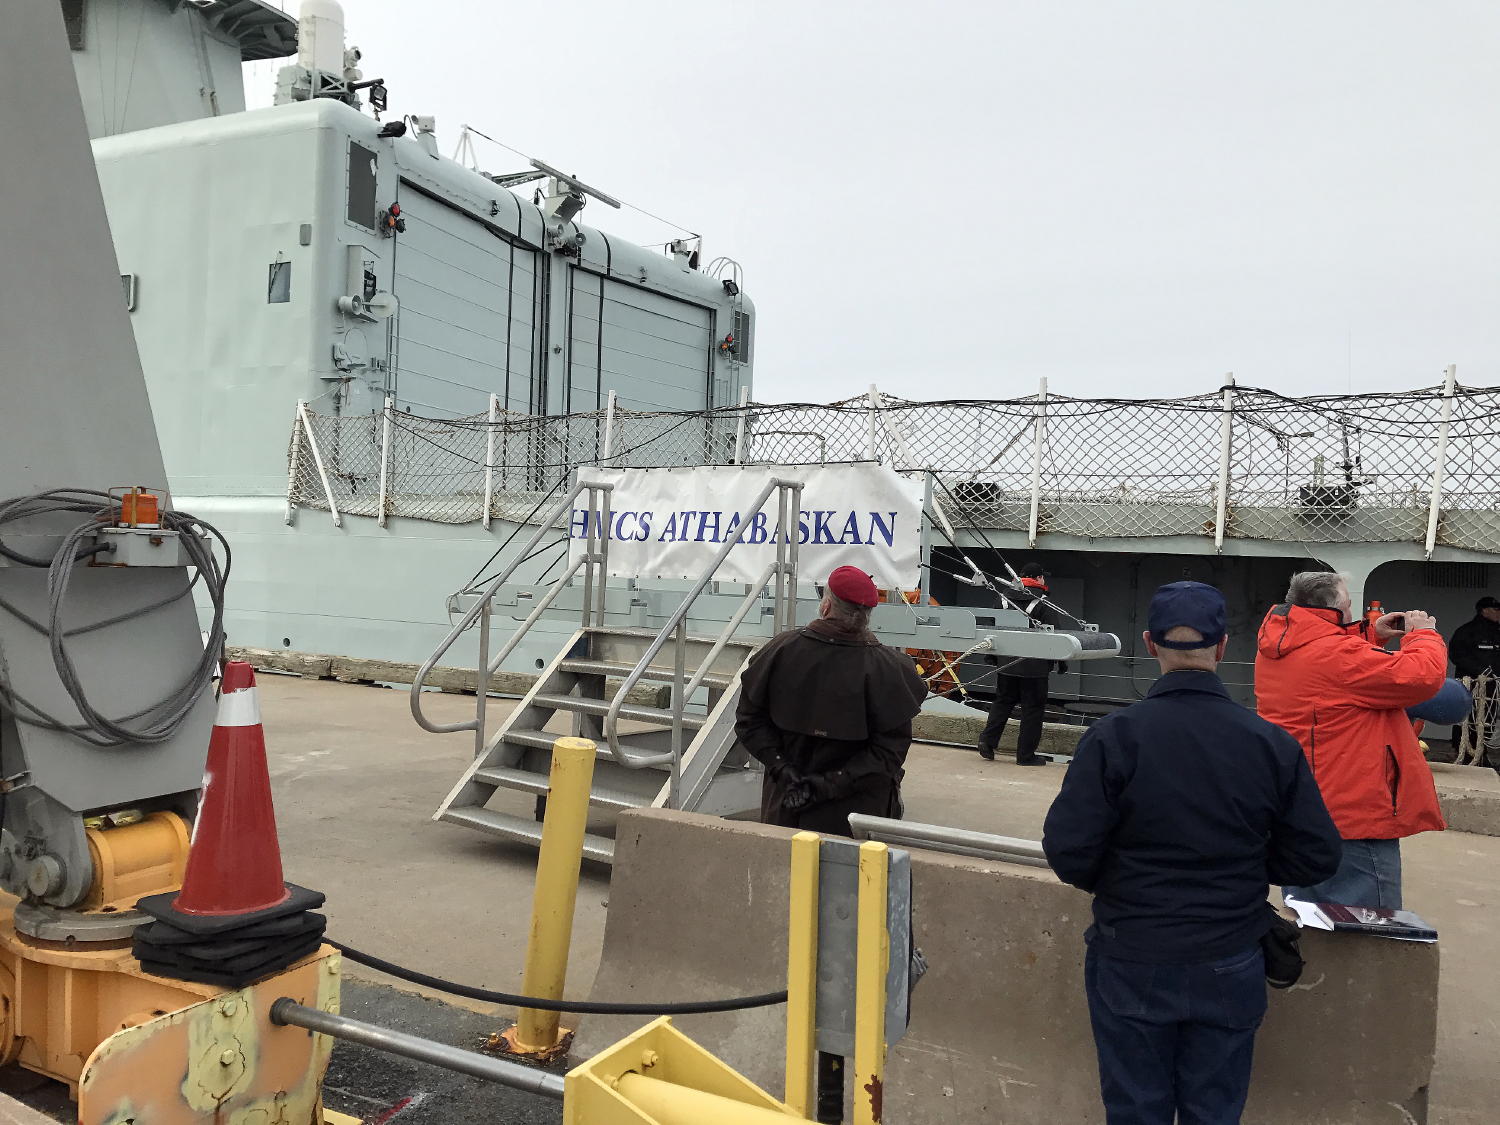 HMCS Athabaskan, Paying-Off Cruise.